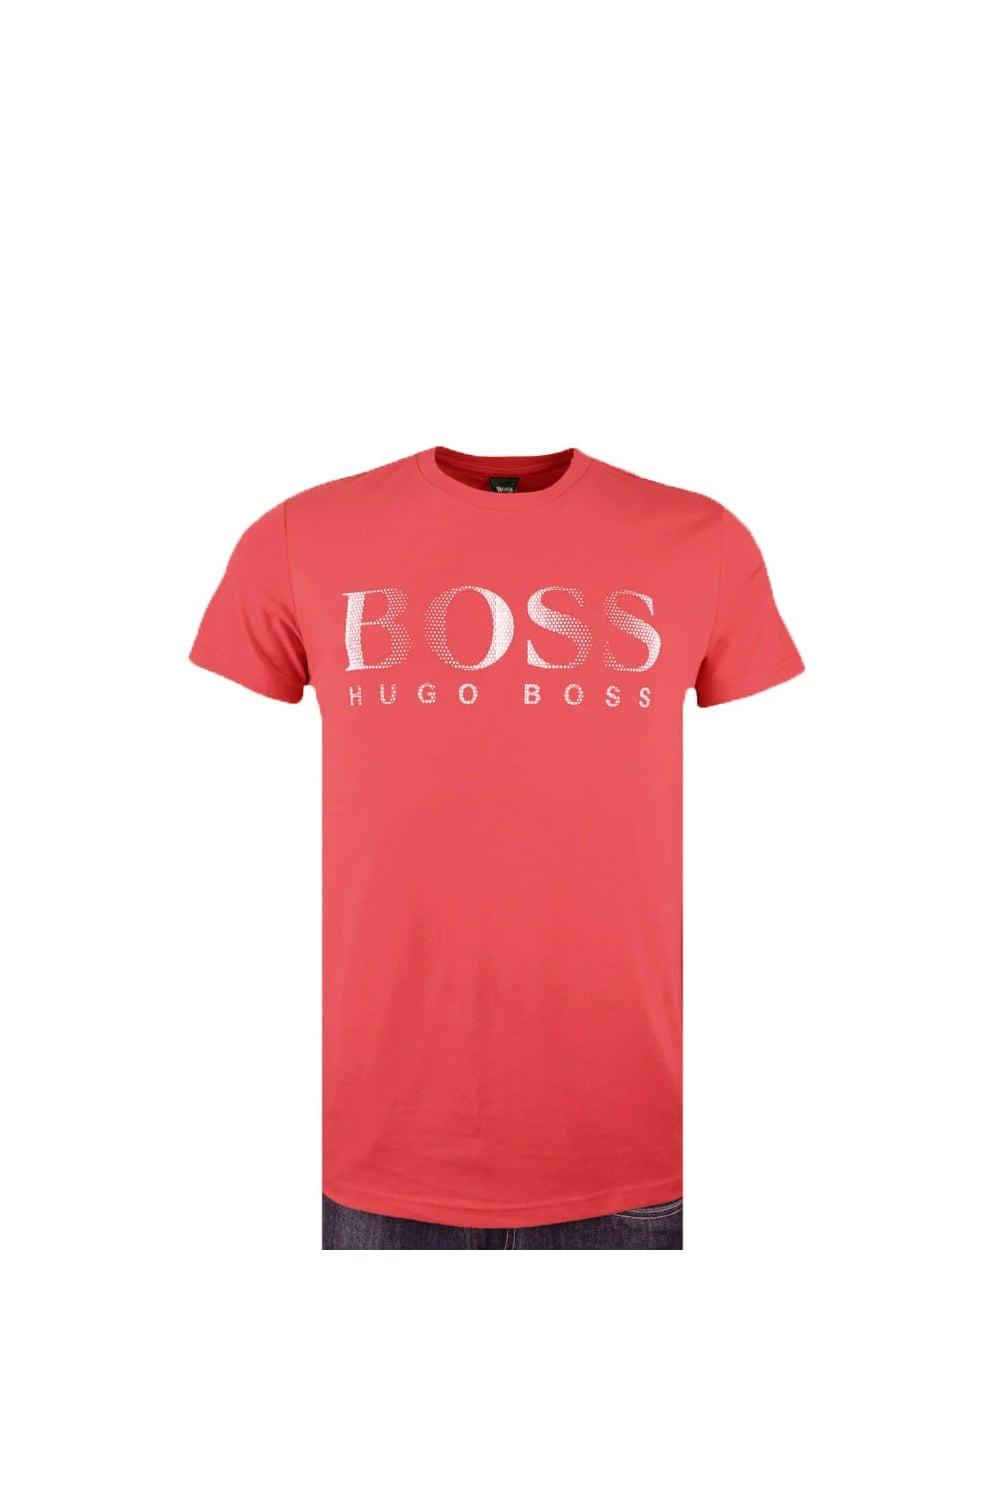 Red Clothing Company Logo - Hugo Boss Black Hugo Boss Beachwear T-shirt Red - Clothing from ...